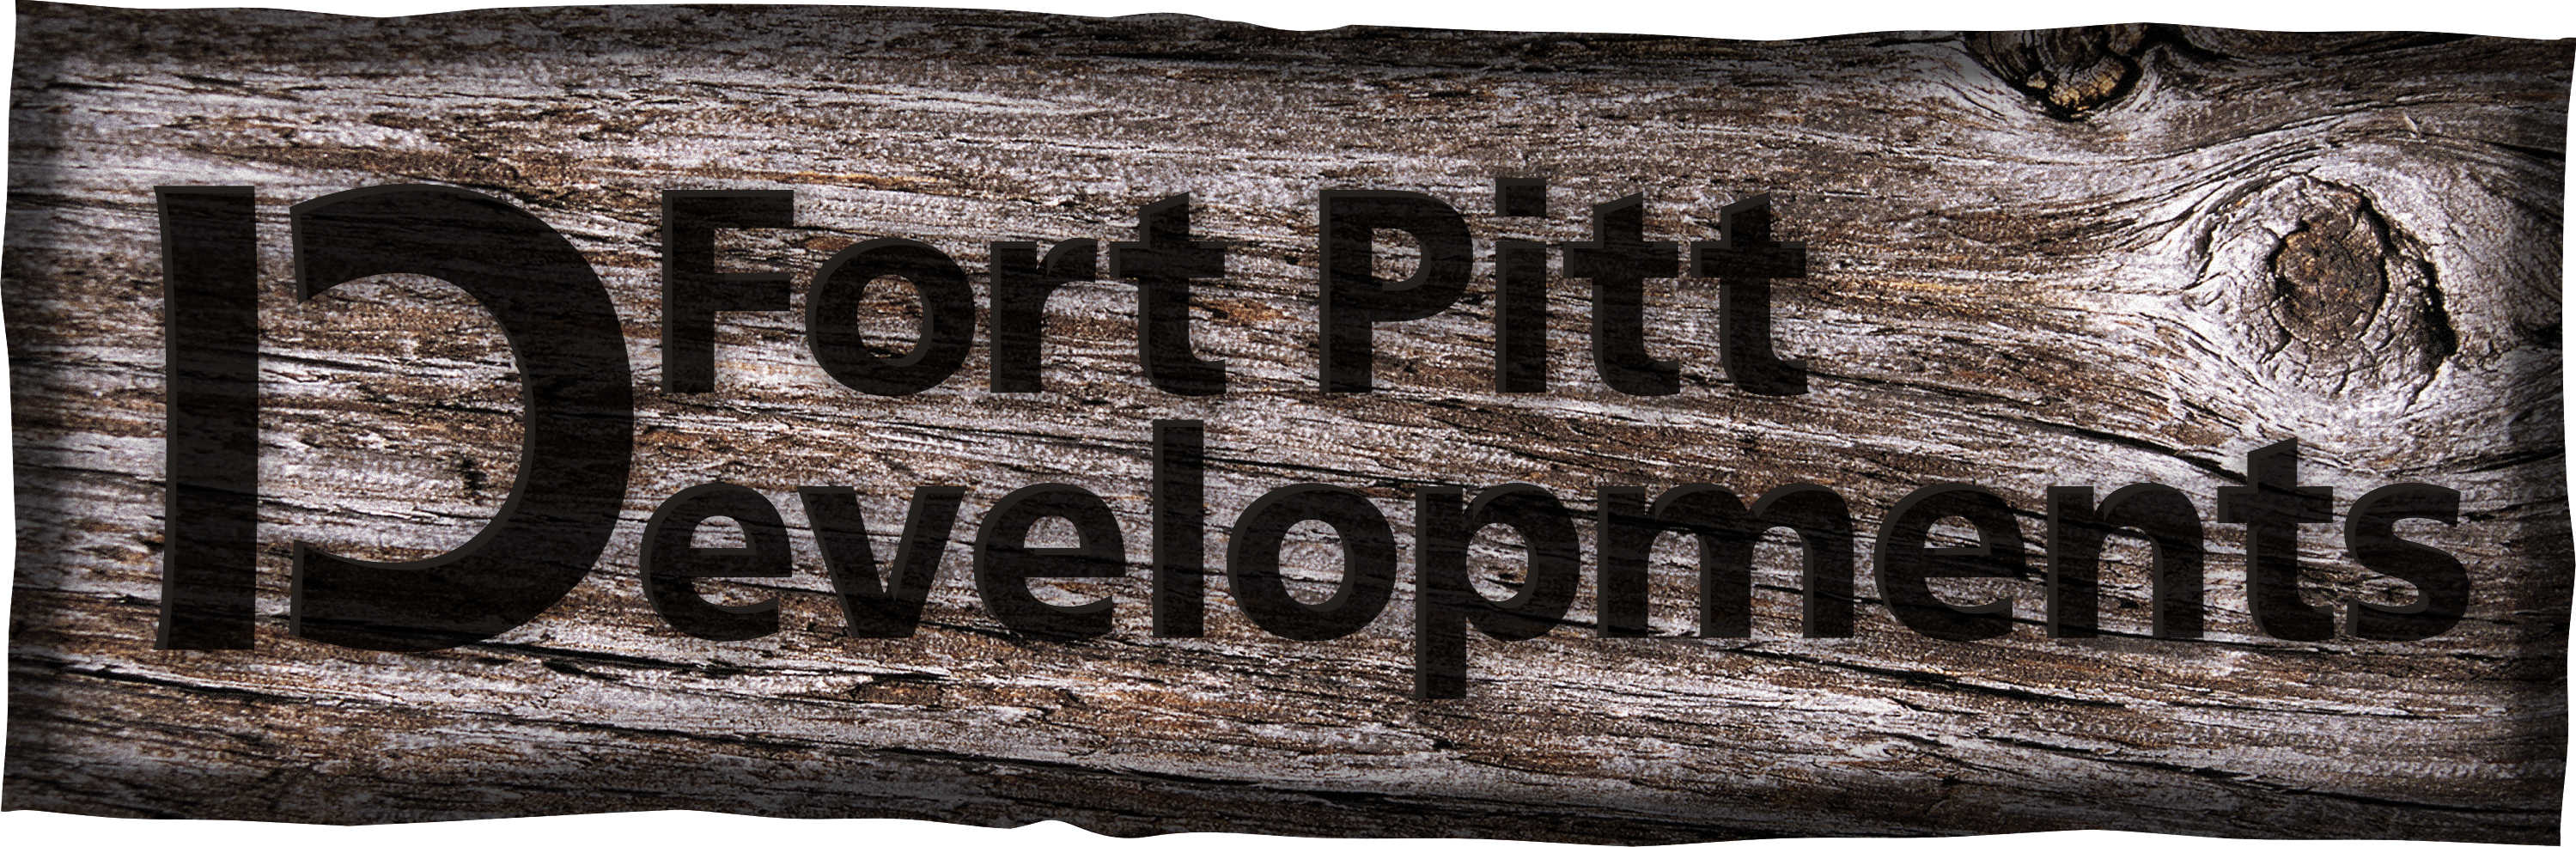 Fort Pitt Developments